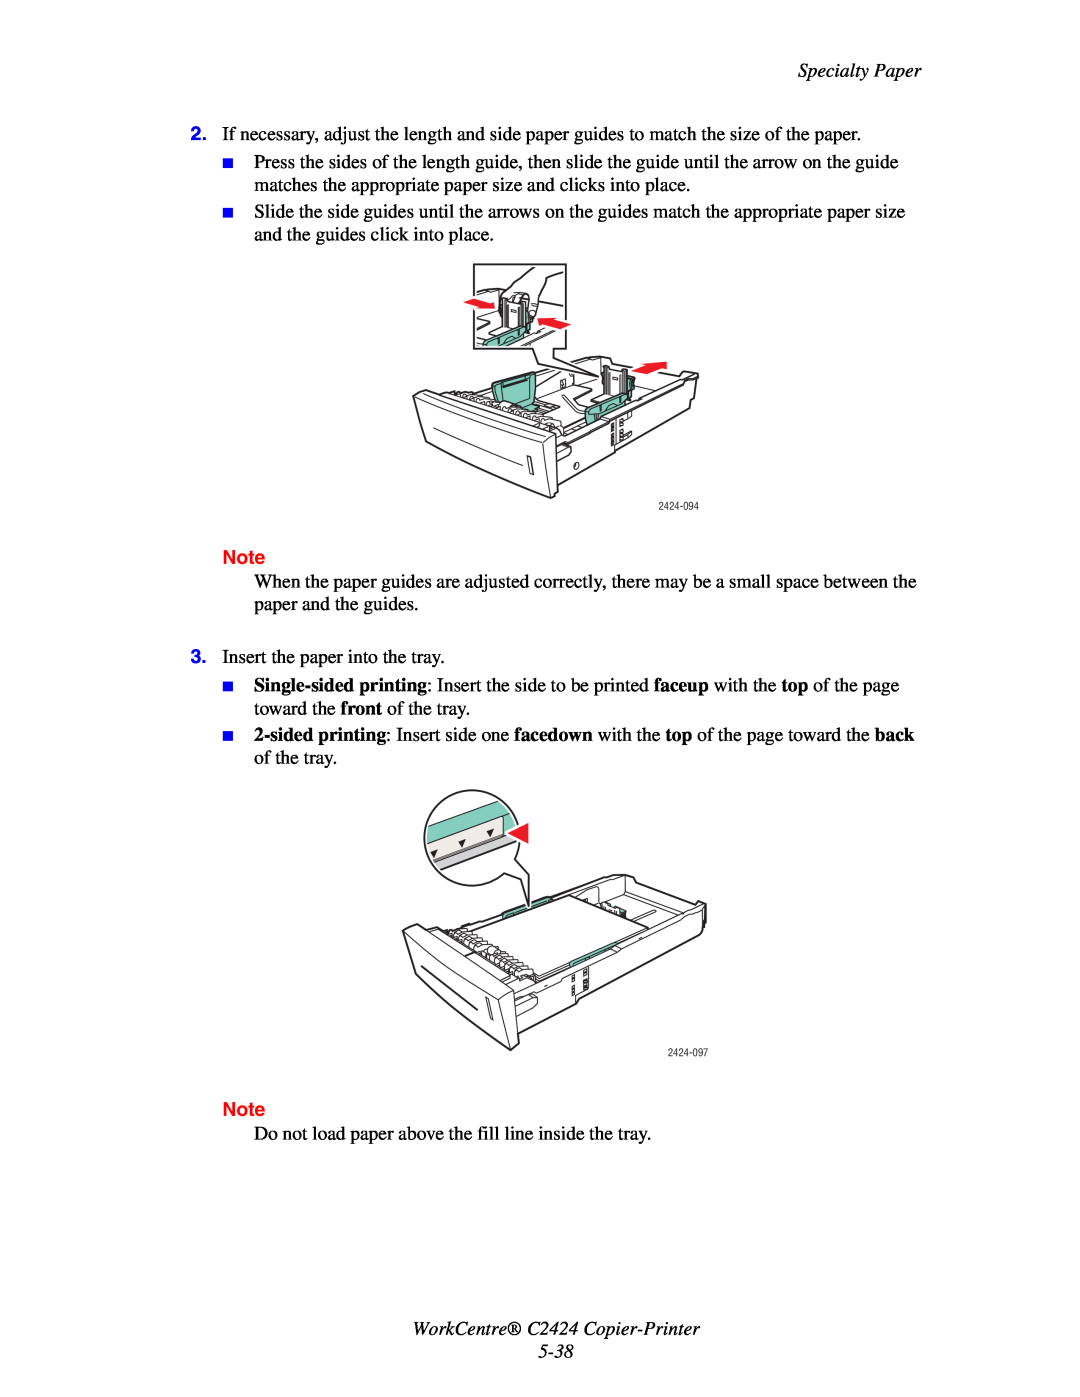 2Wire C424 manual WorkCentre C2424 Copier-Printer, Specialty Paper 